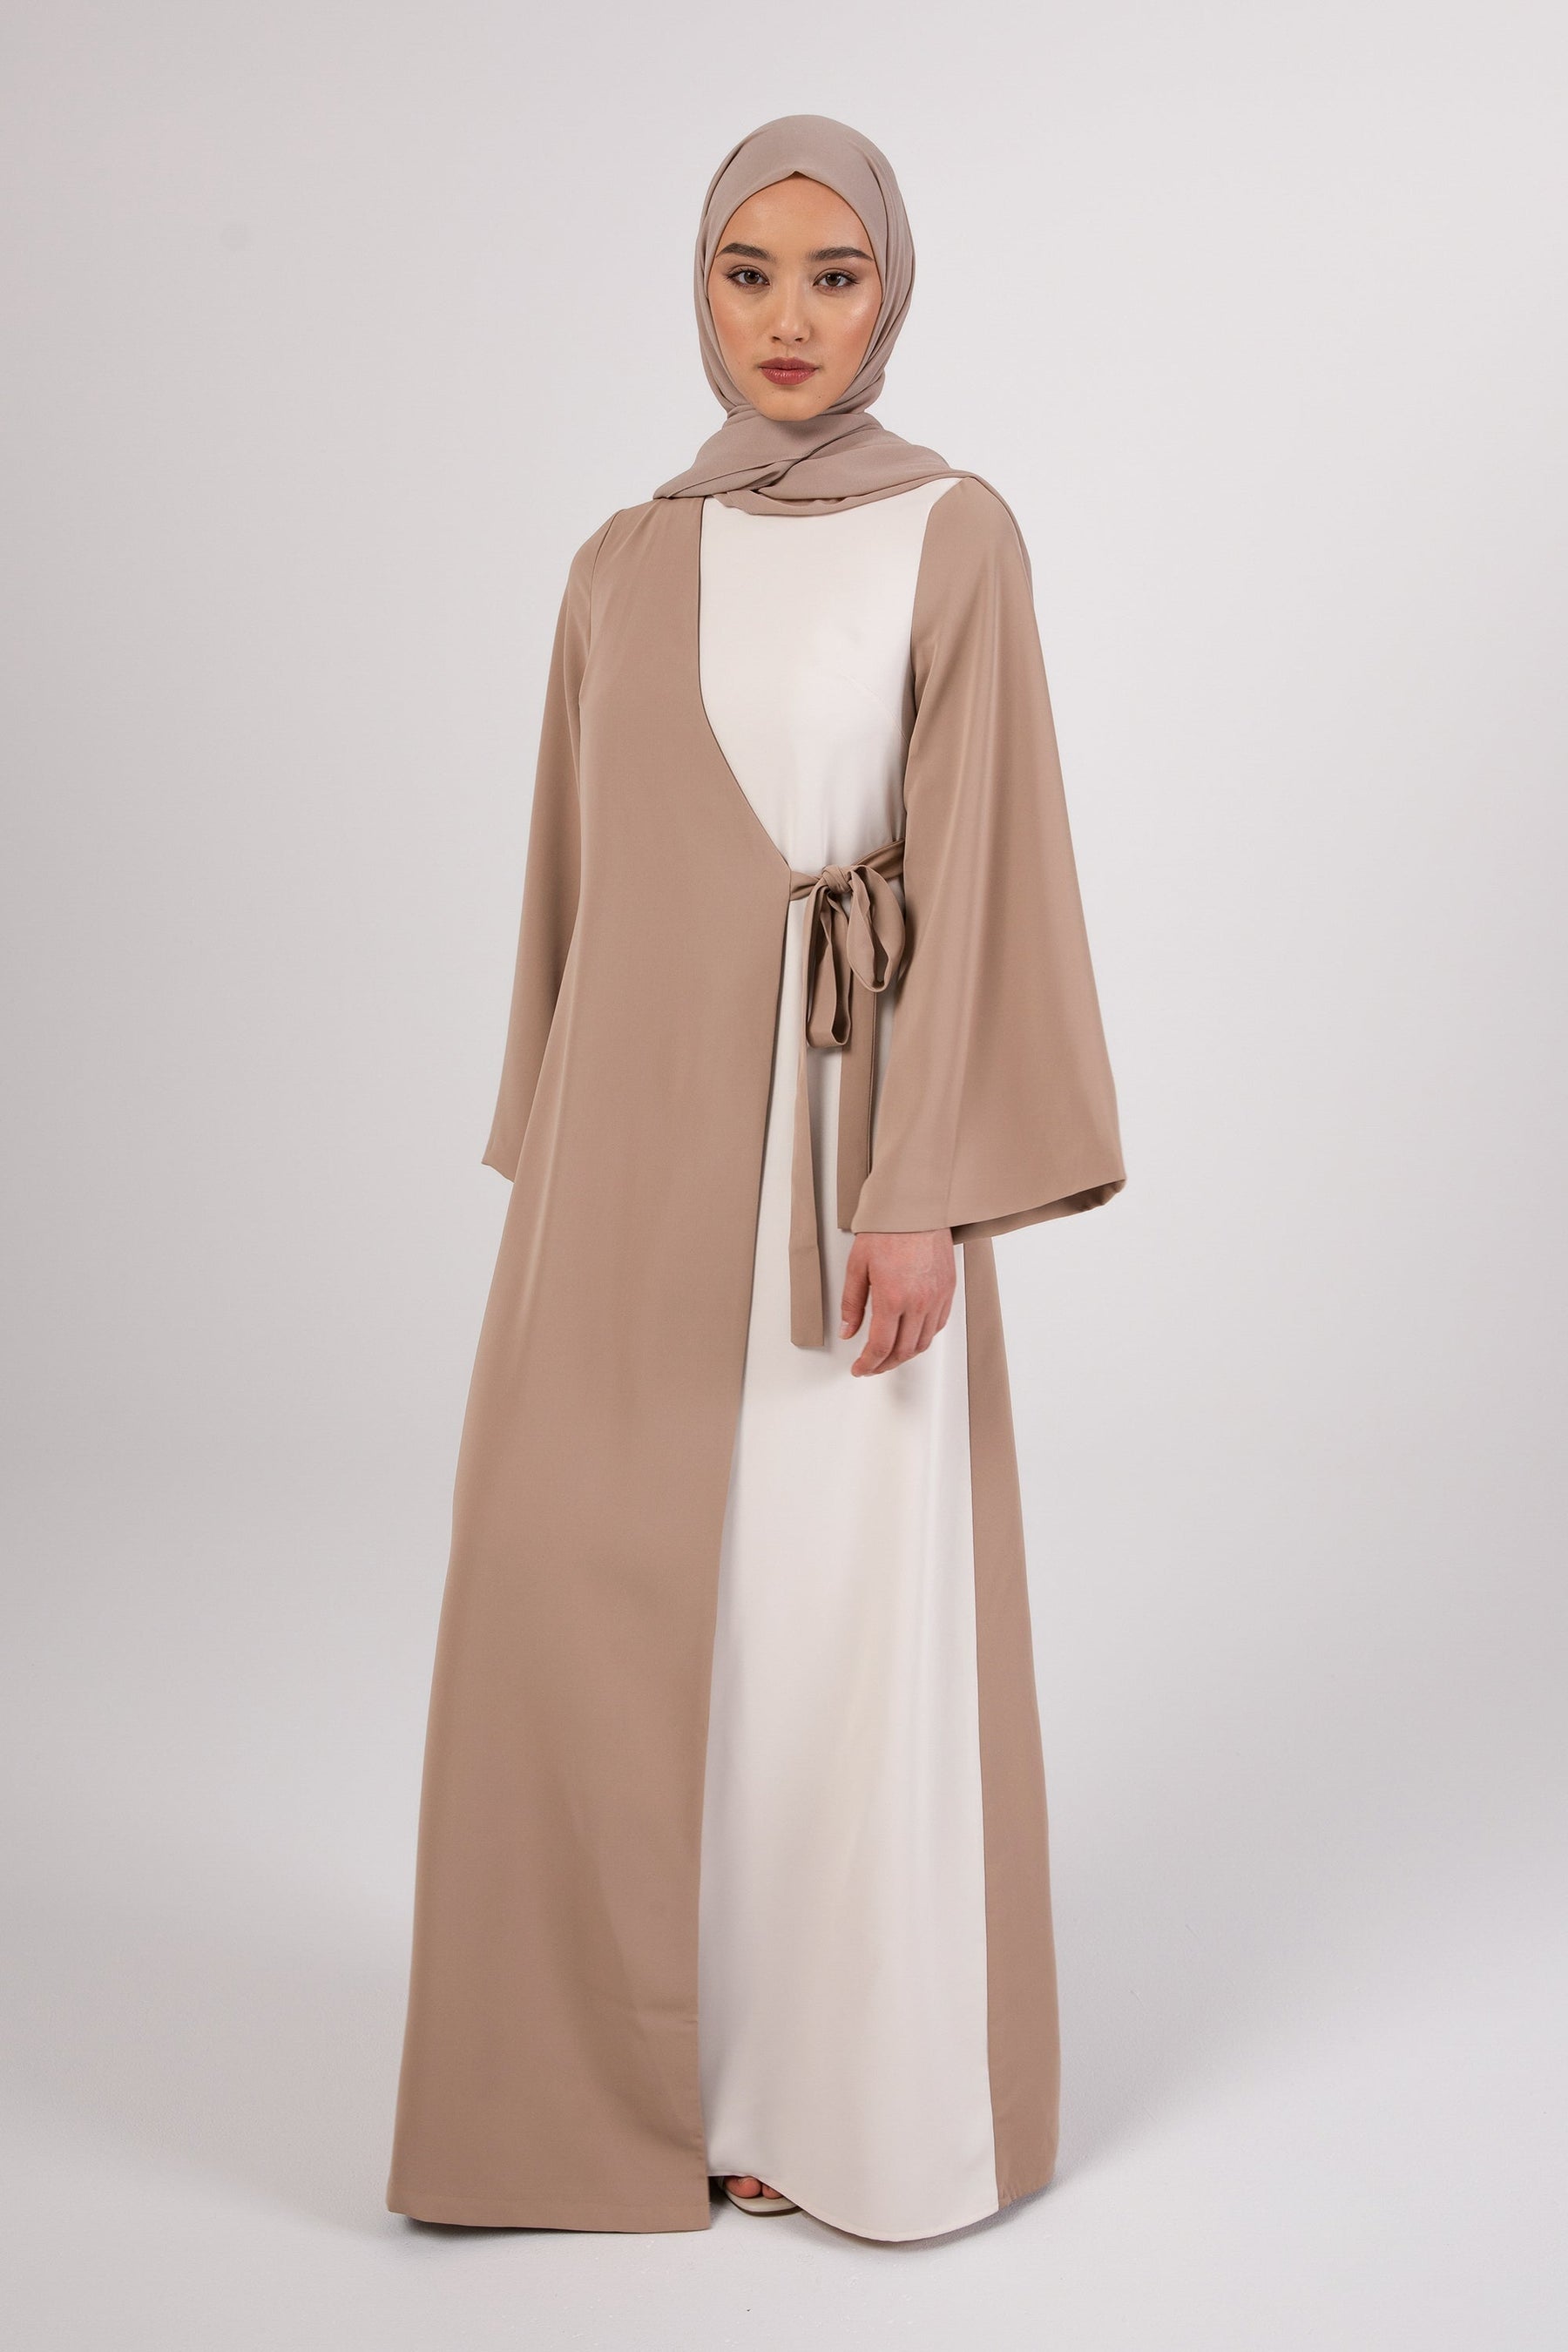 Omaya Two Tone Wrap Front Maxi Dress - Caffe Veiled 